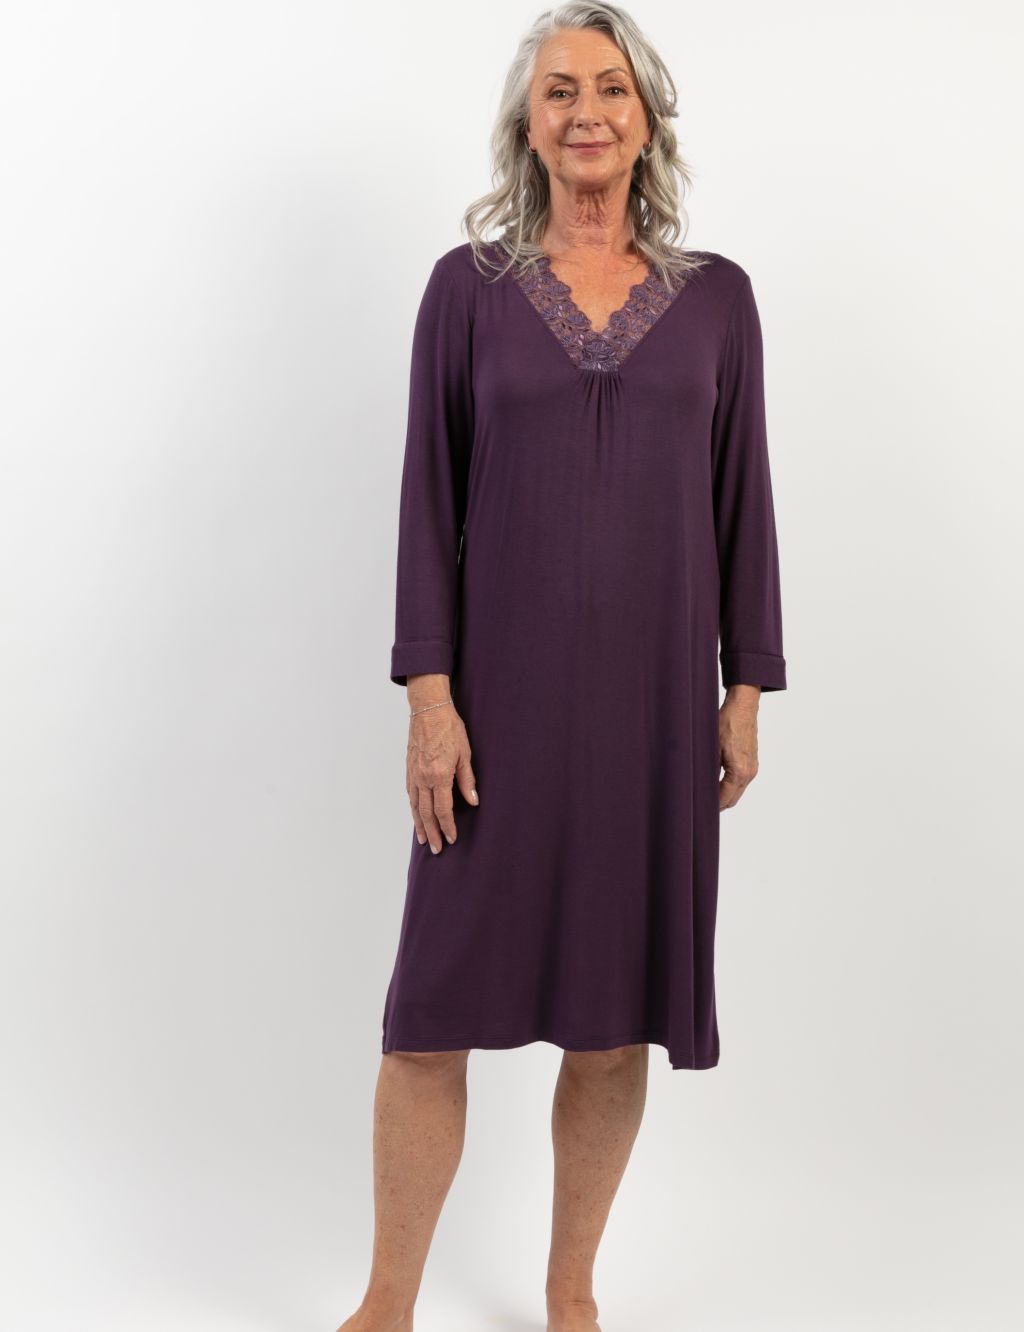 Modal Rich Lace Trim Short Nightdress image 1